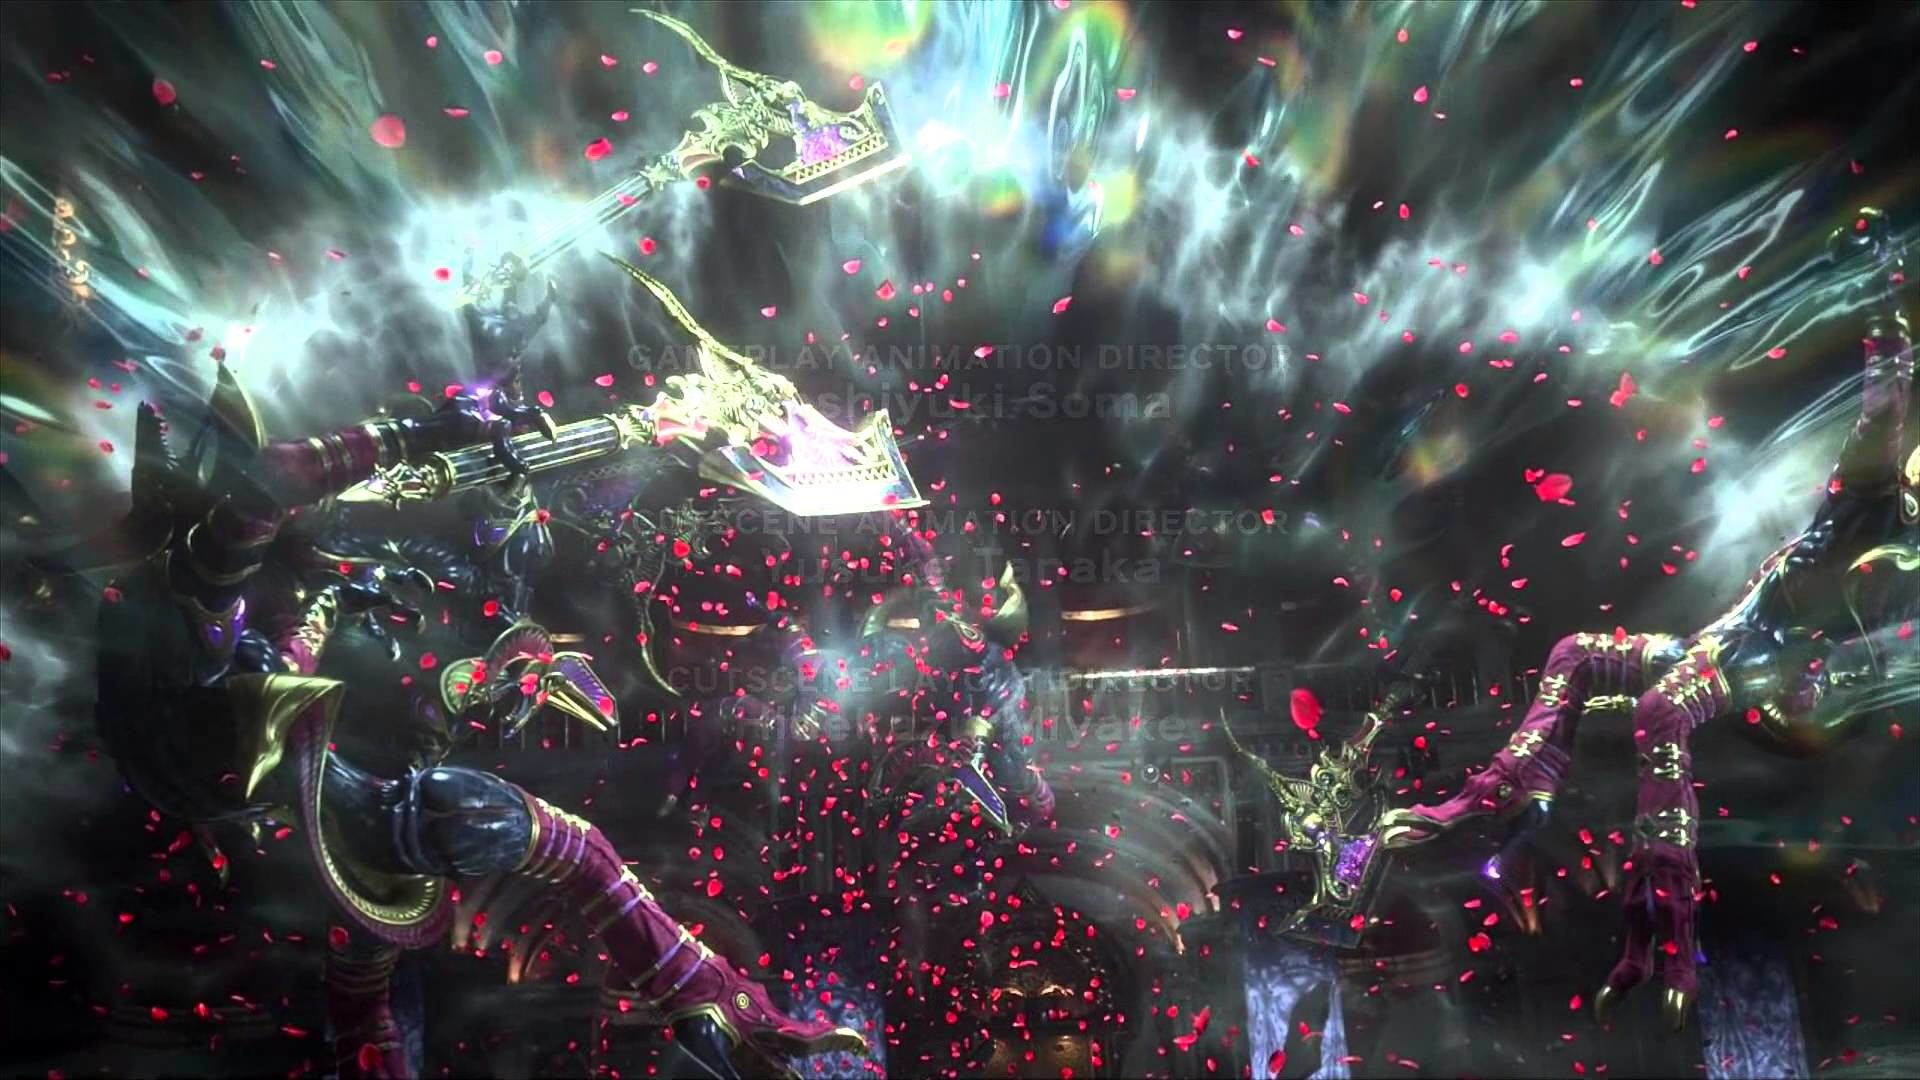 1920x1080 Lightning Returns: Final Fantasy XIII - Demo Opening Cutscene Intro (1080p)